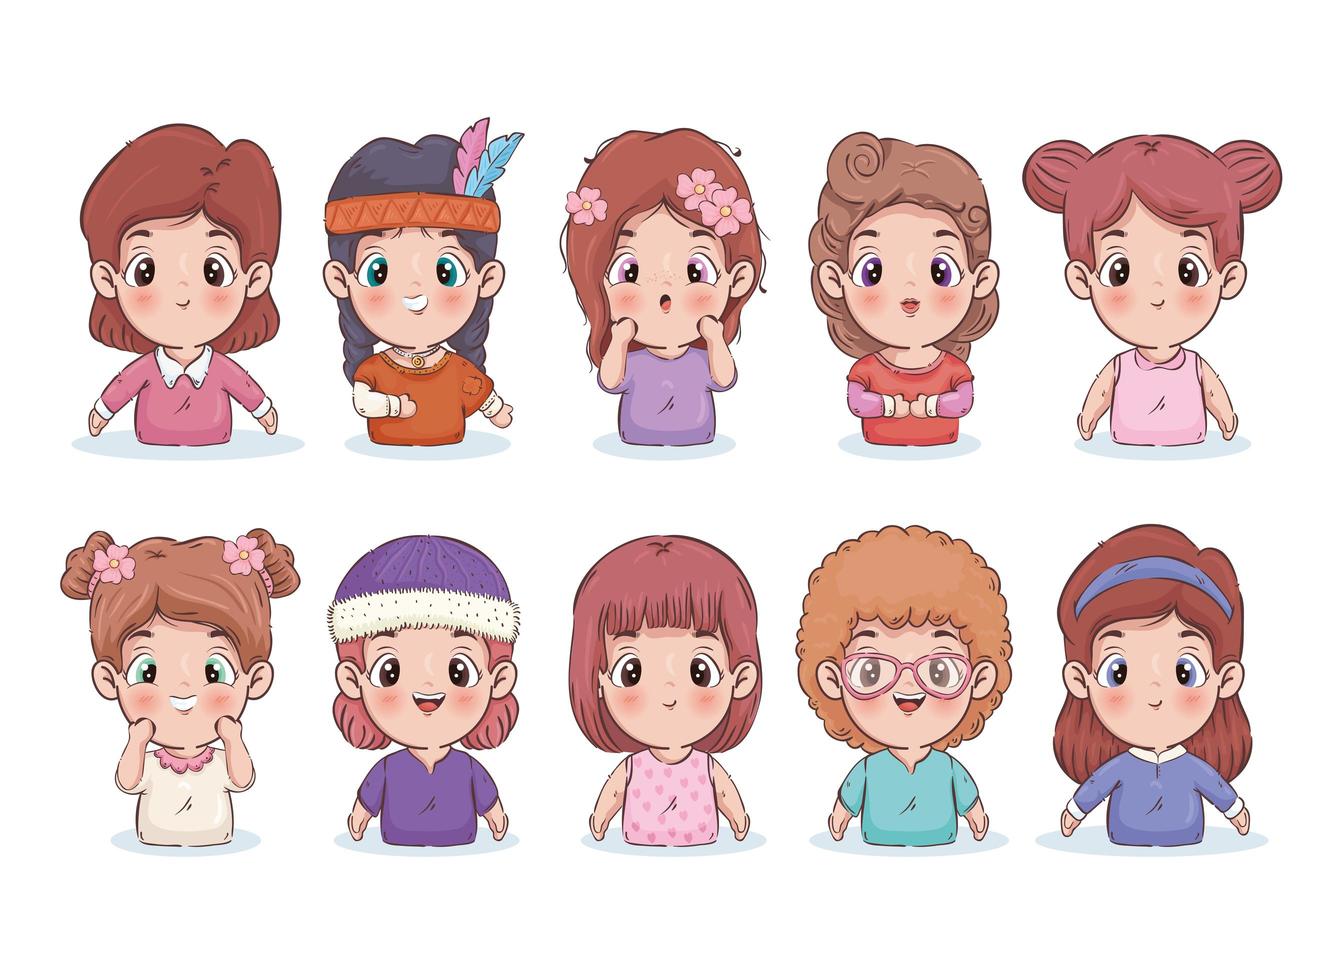 acción Sada italiano diseño de vector de colección de iconos de dibujos animados de niñas  2697264 Vector en Vecteezy